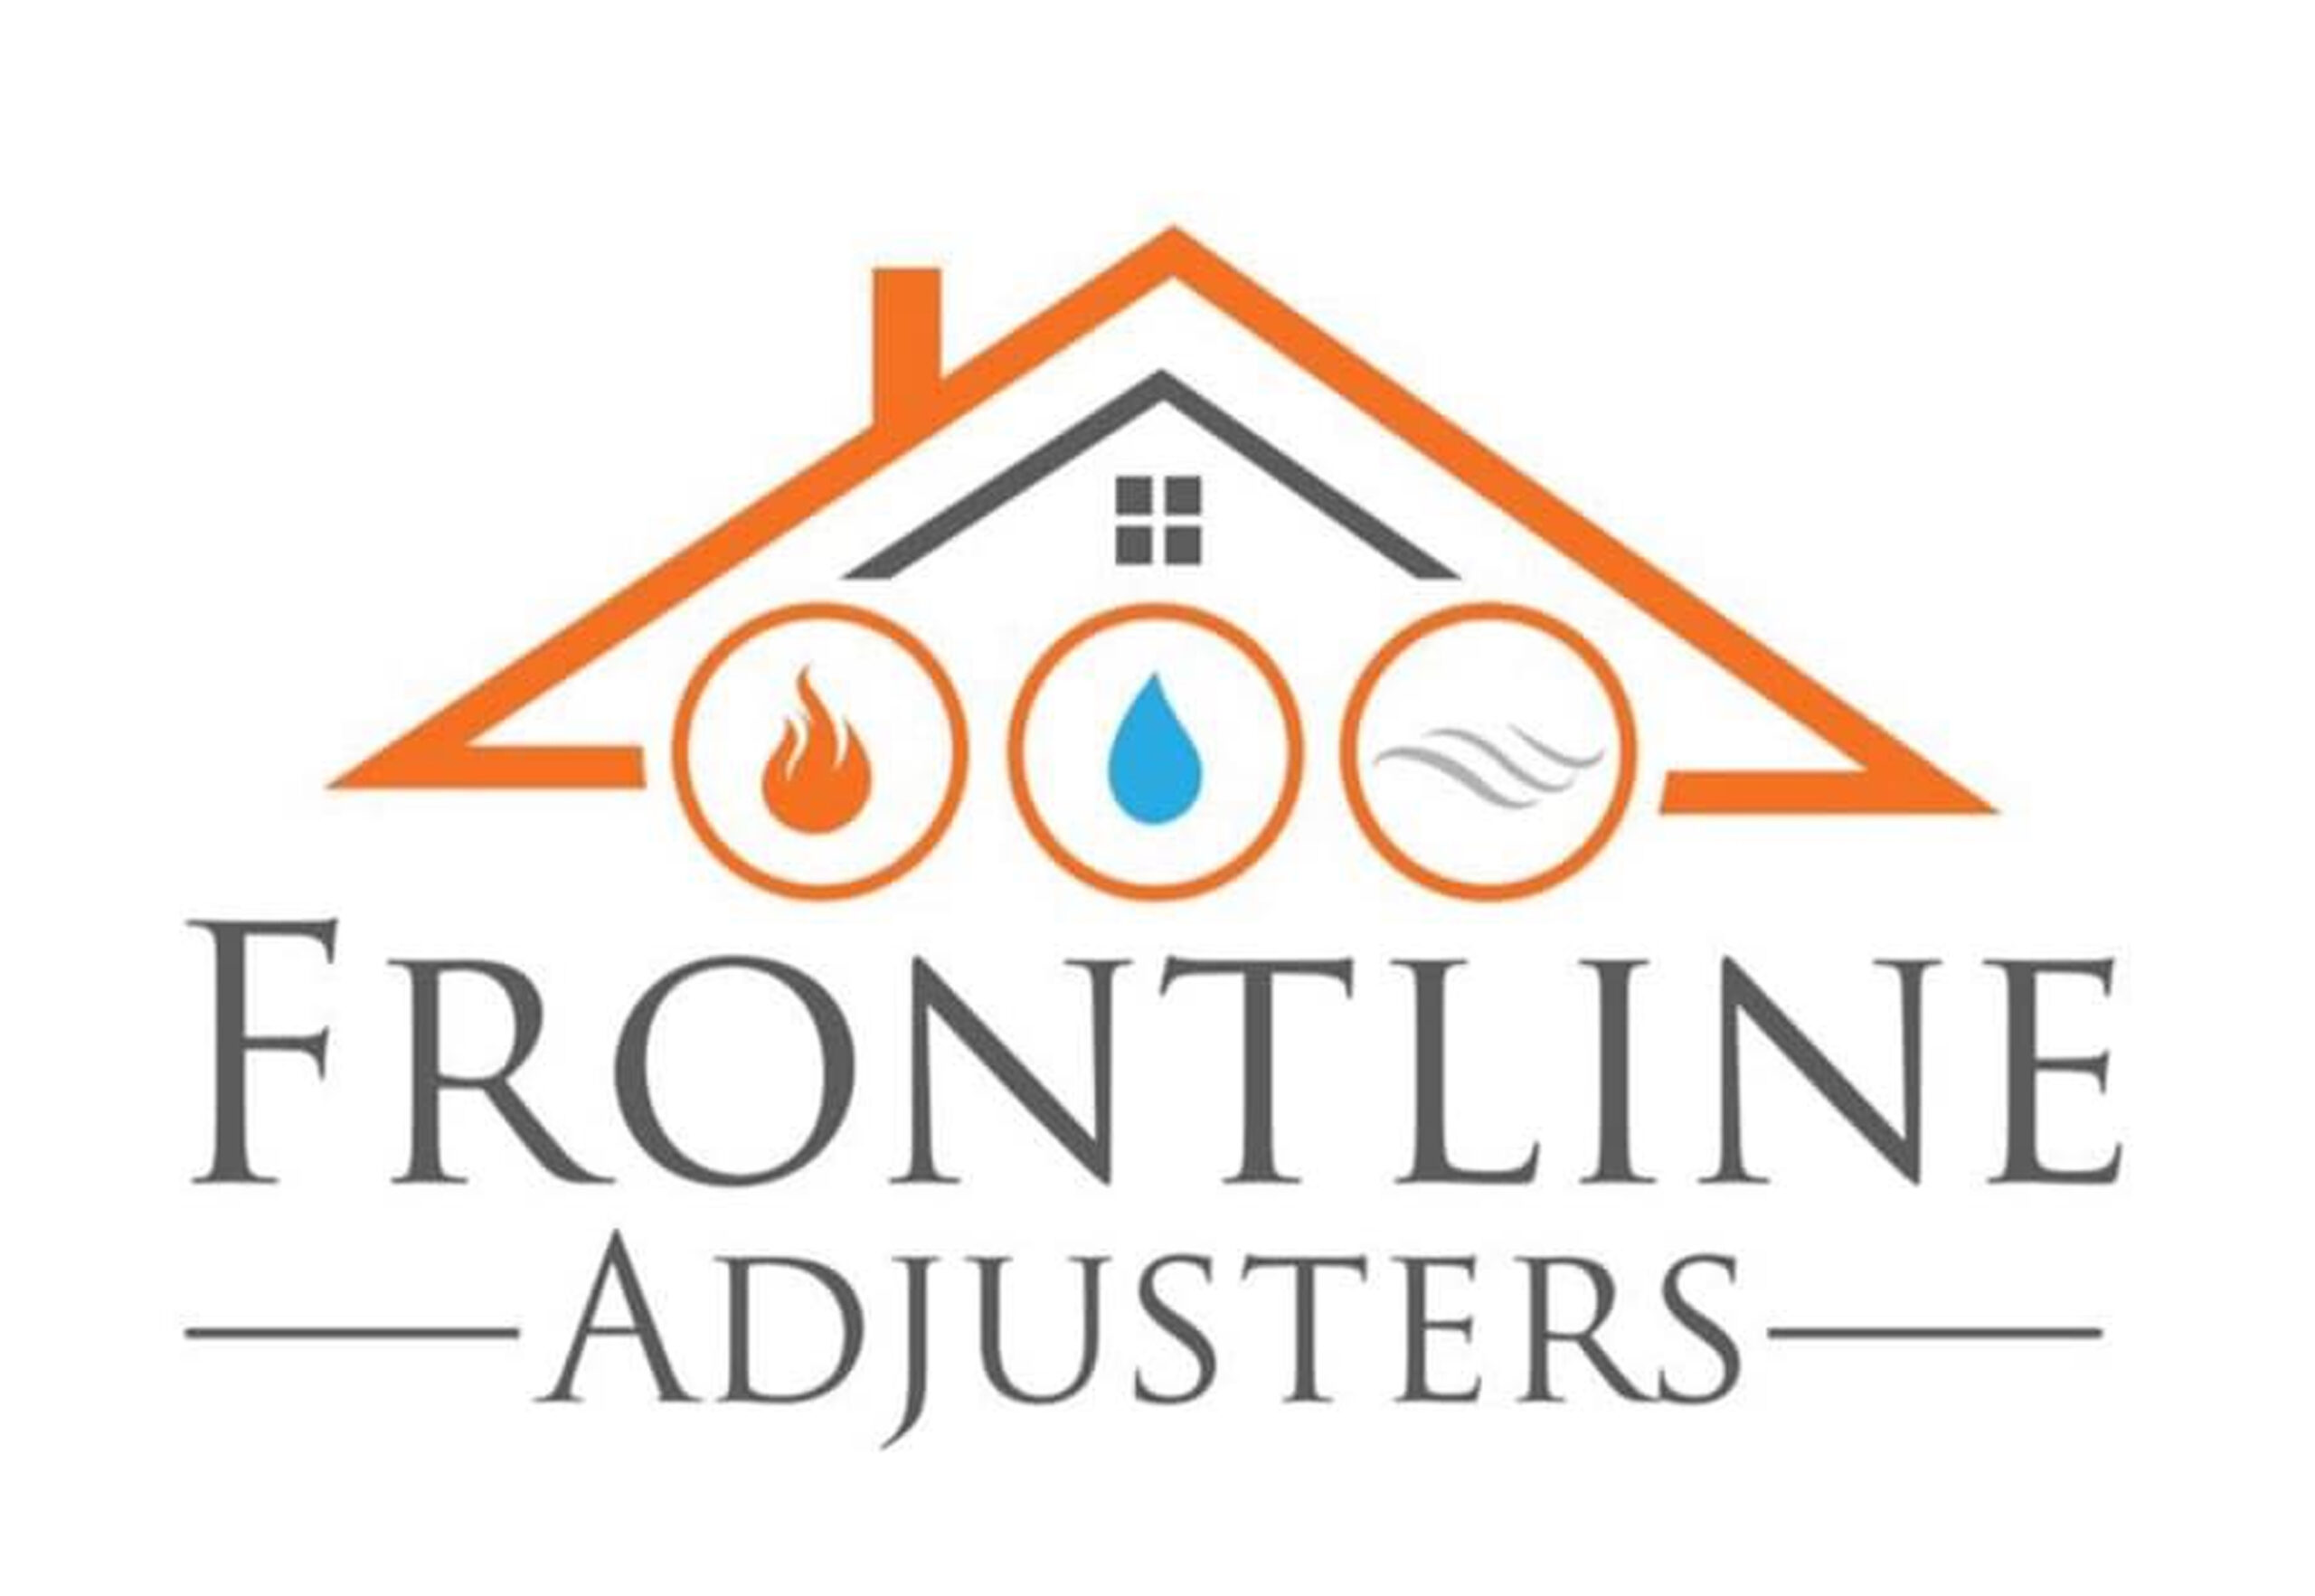 Frontline Adjusters logo